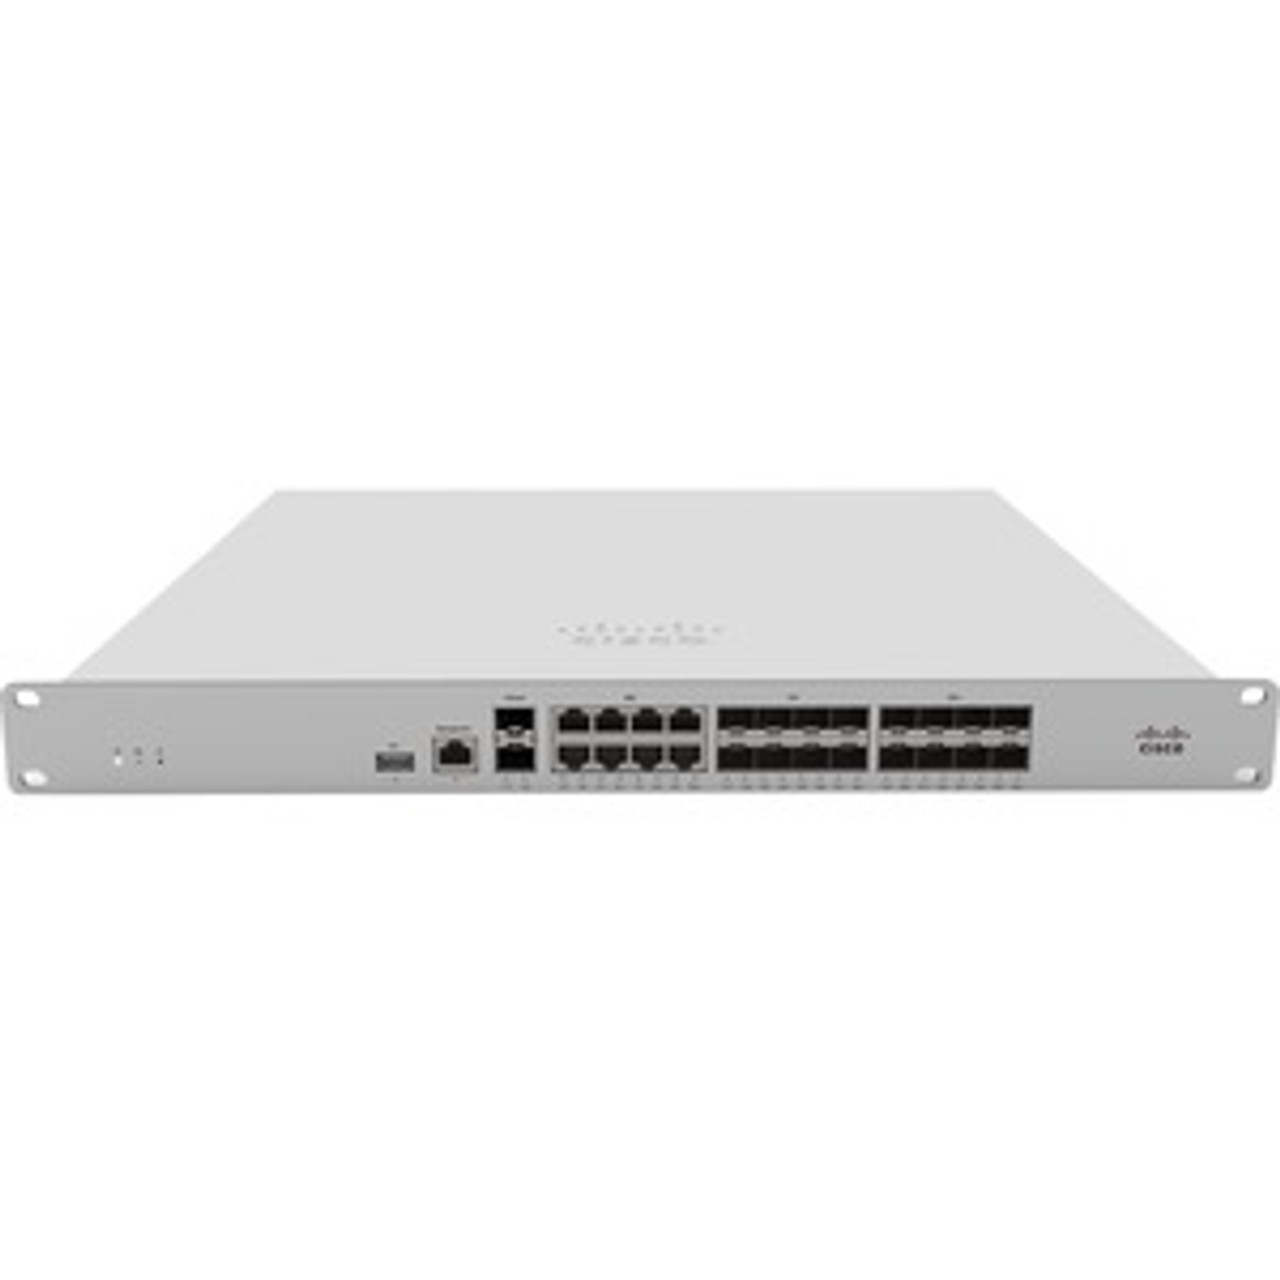 MX450-HW Cisco Meraki MX450 Router/Security Appliance (Refurbished)